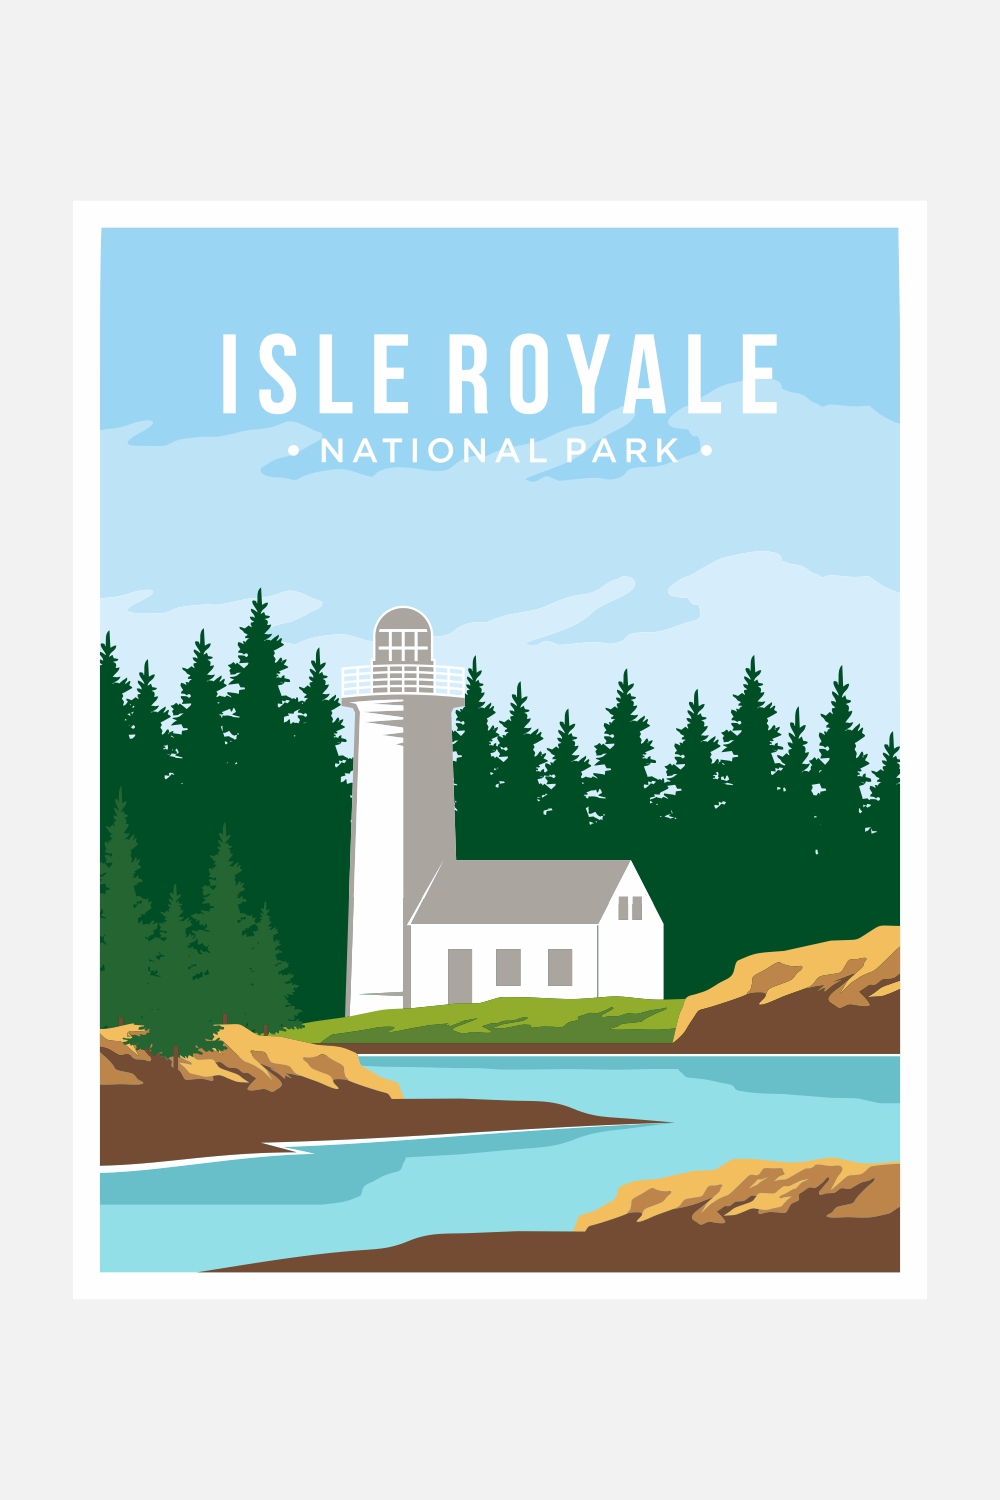 Isle Royale national park poster vector illustration design – Only $8 pinterest preview image.